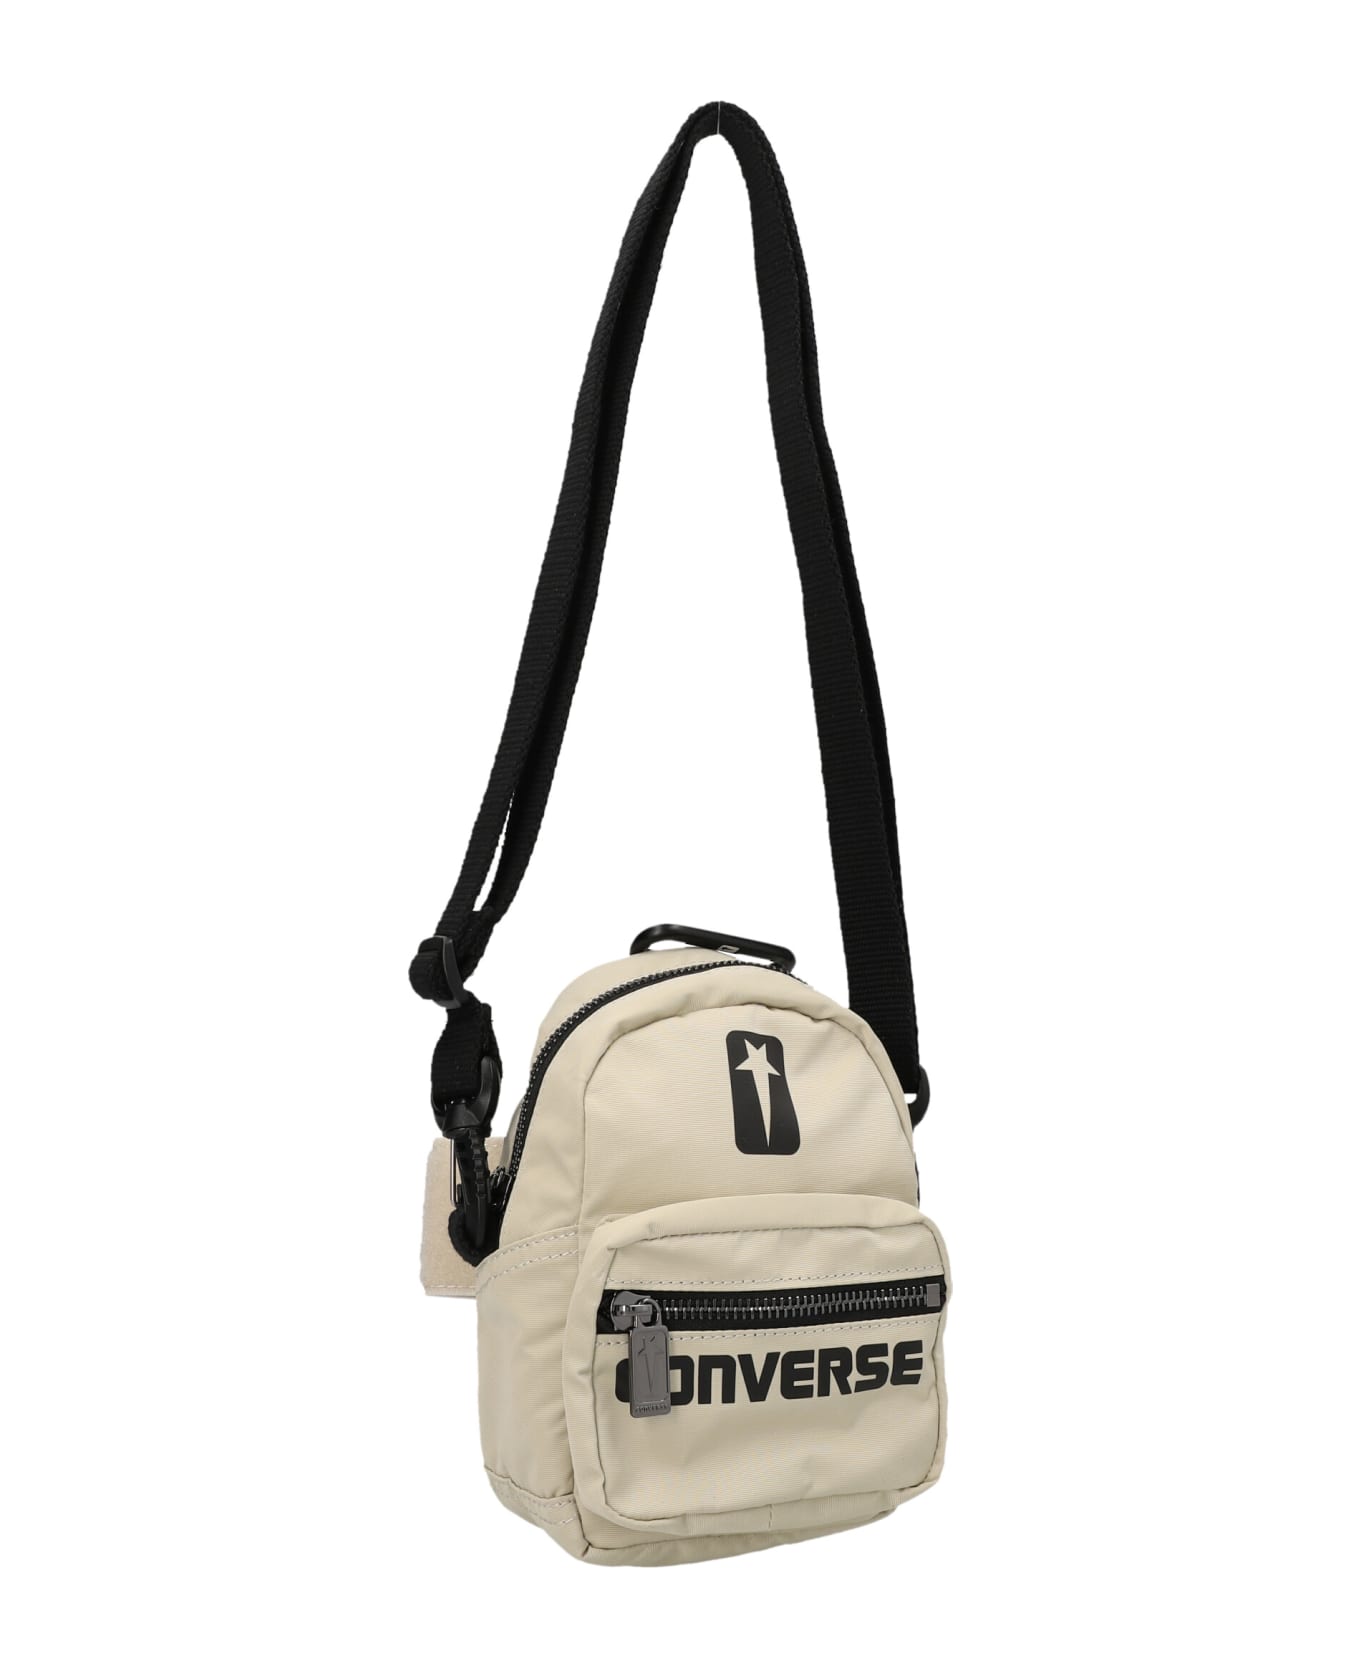 DRKSHDW X Converse Crossbody Bag - Gray